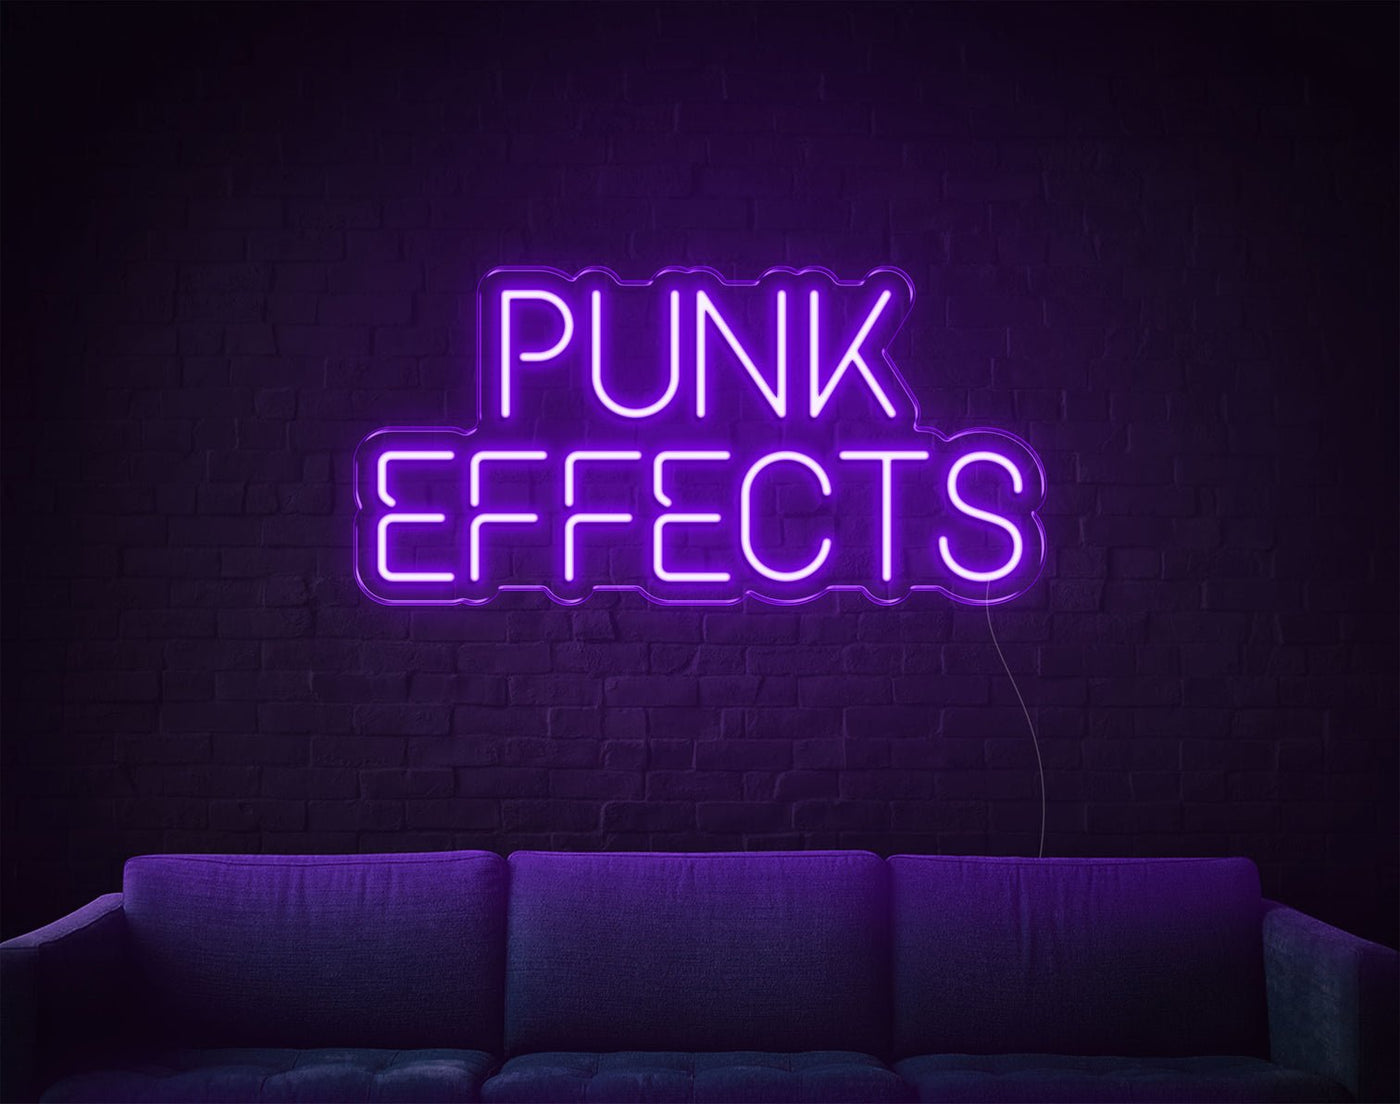 Punk Effects LED Neon Sign - 10inch x 20inchPurple